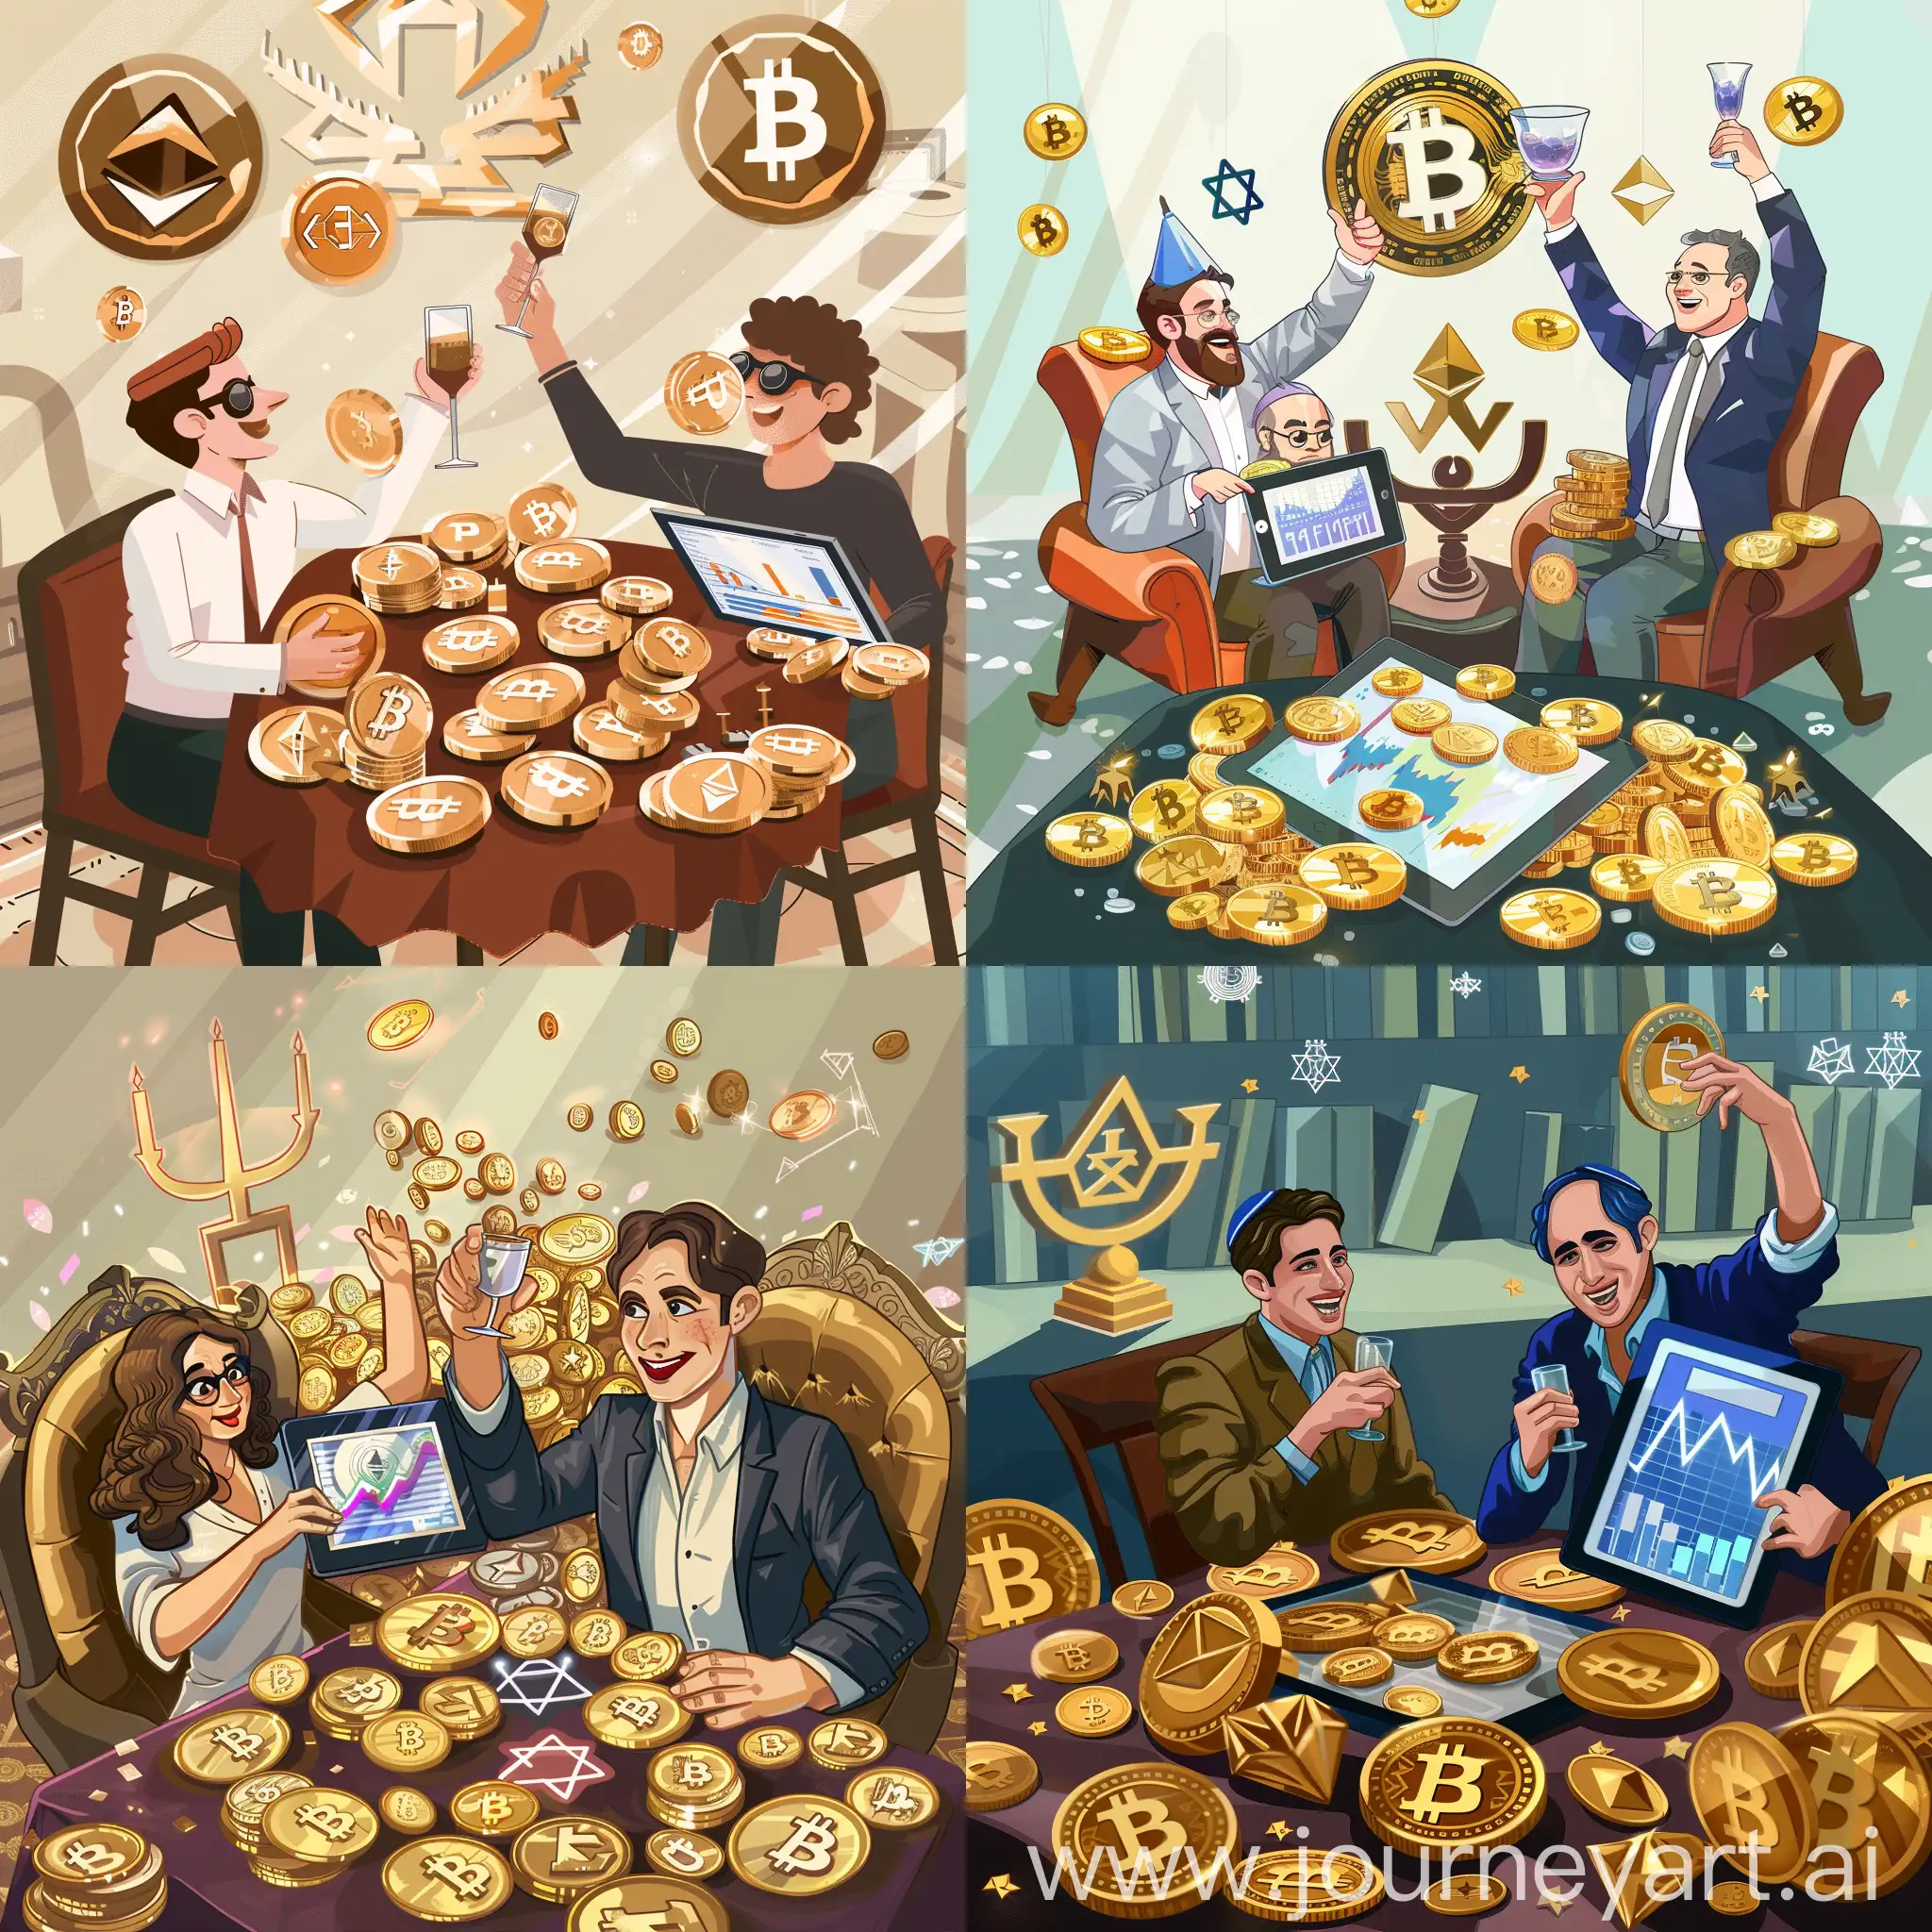 Jewish-Friends-Celebrating-Crypto-Success-at-Lavish-Table